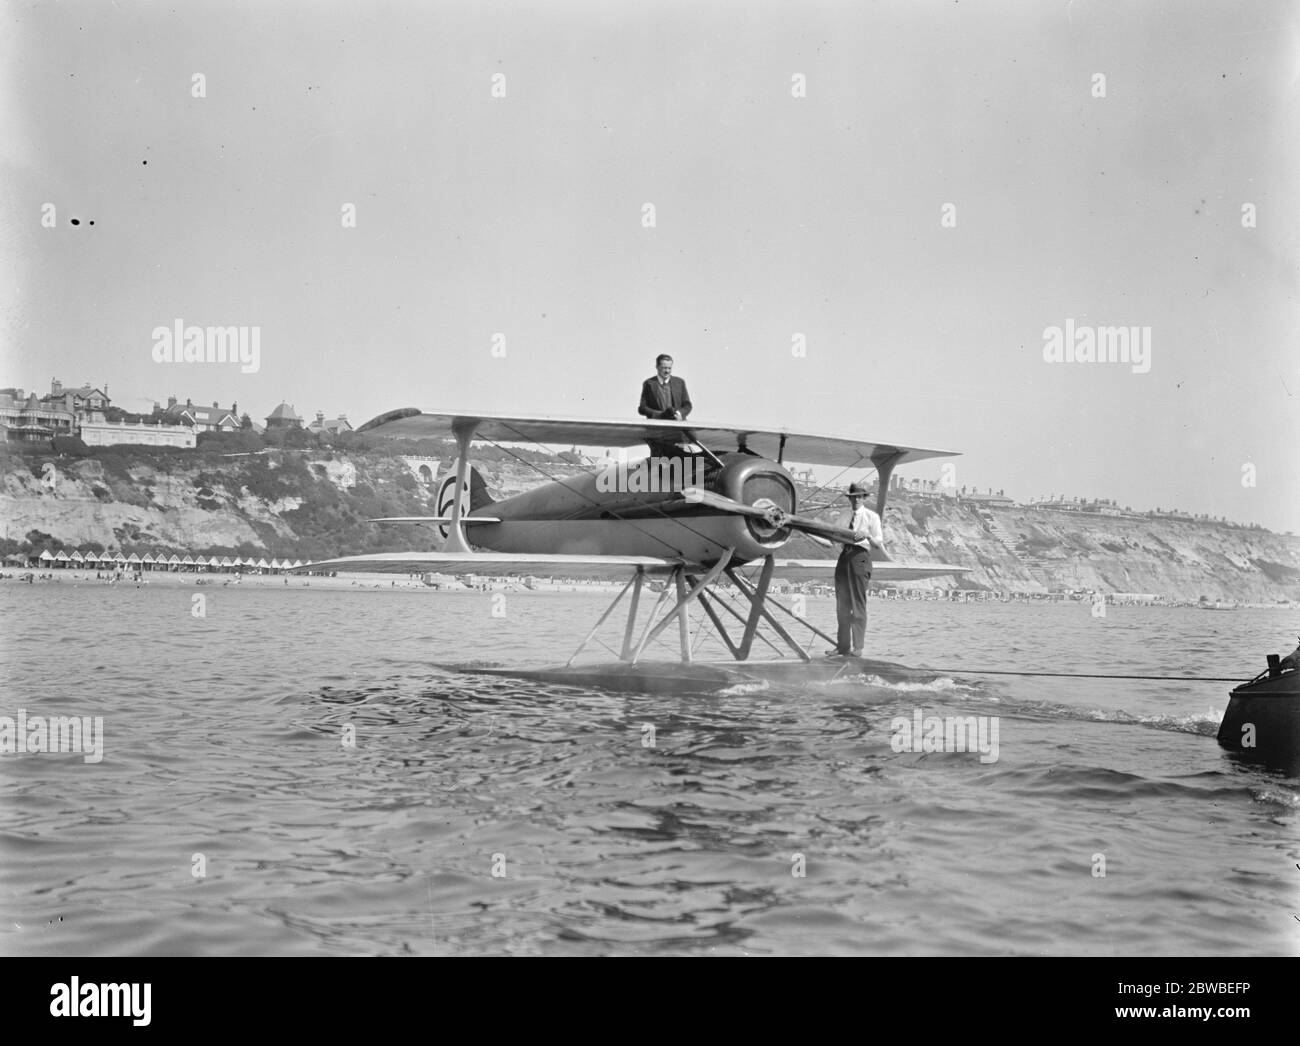 #5 MORANE SEA PLANE RACING AIRPLANE & PILOT 4X6 B&W PHOTOGRAPHS LOT OF 2